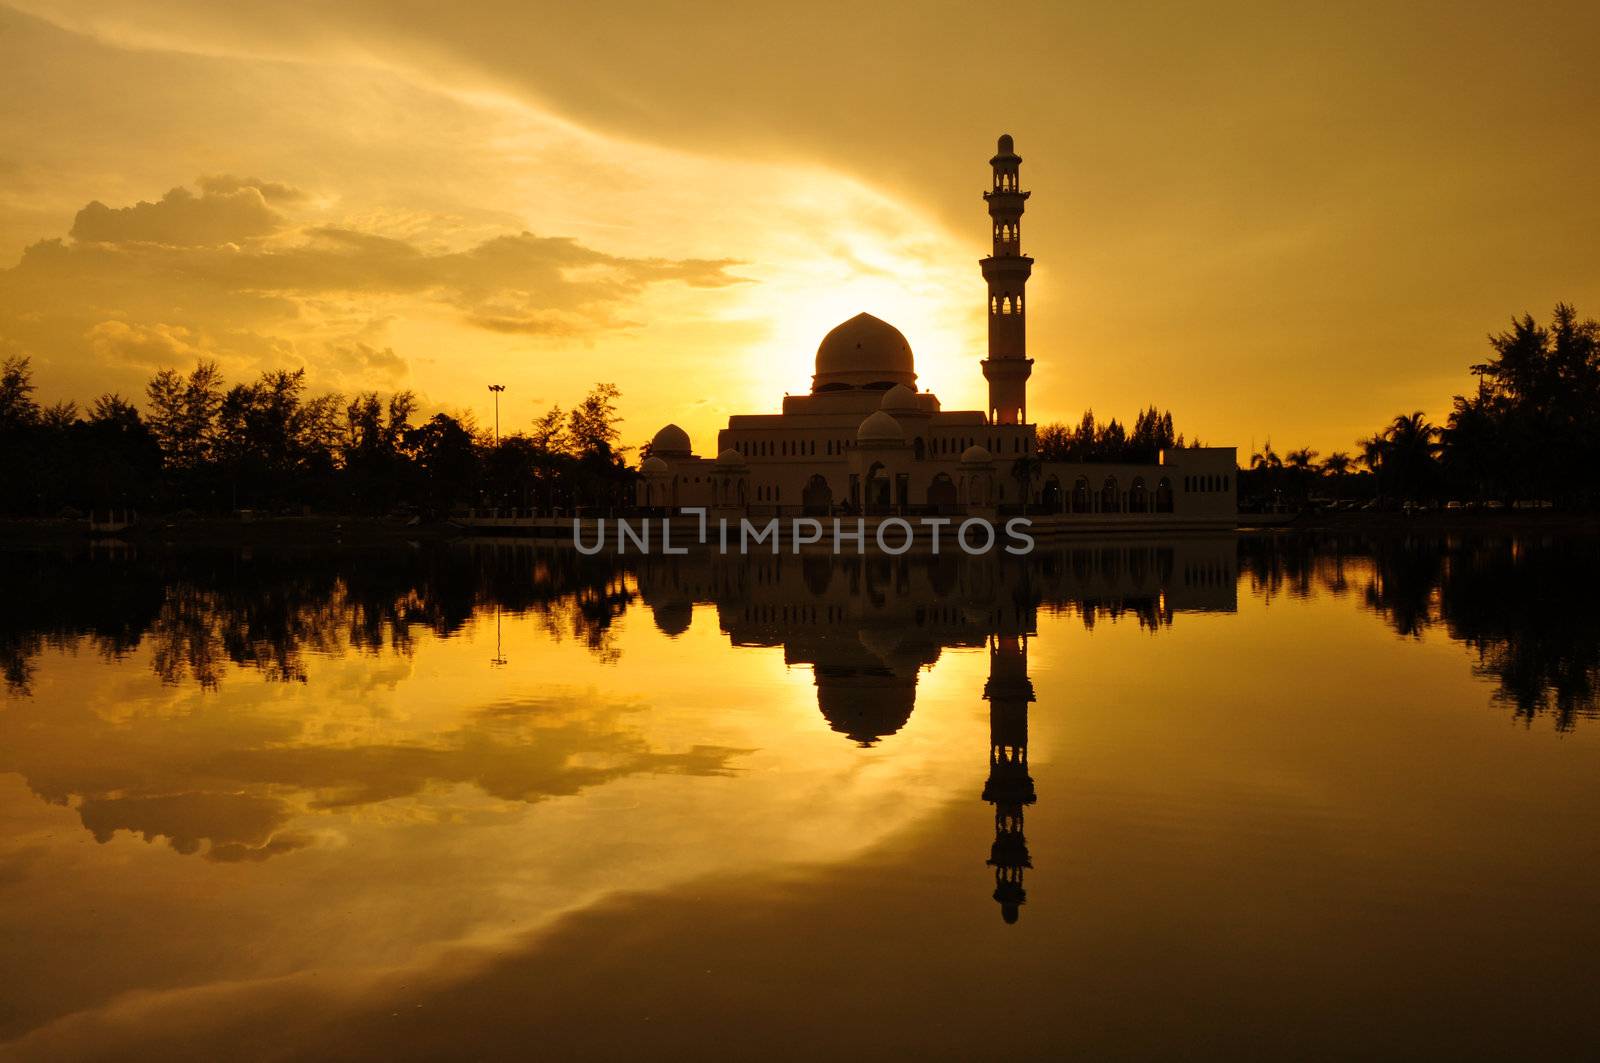 Masjid Tengku Tengah Zaharah or also known as Floating Mosque in Kuala Terengganu, Malaysia with reflection